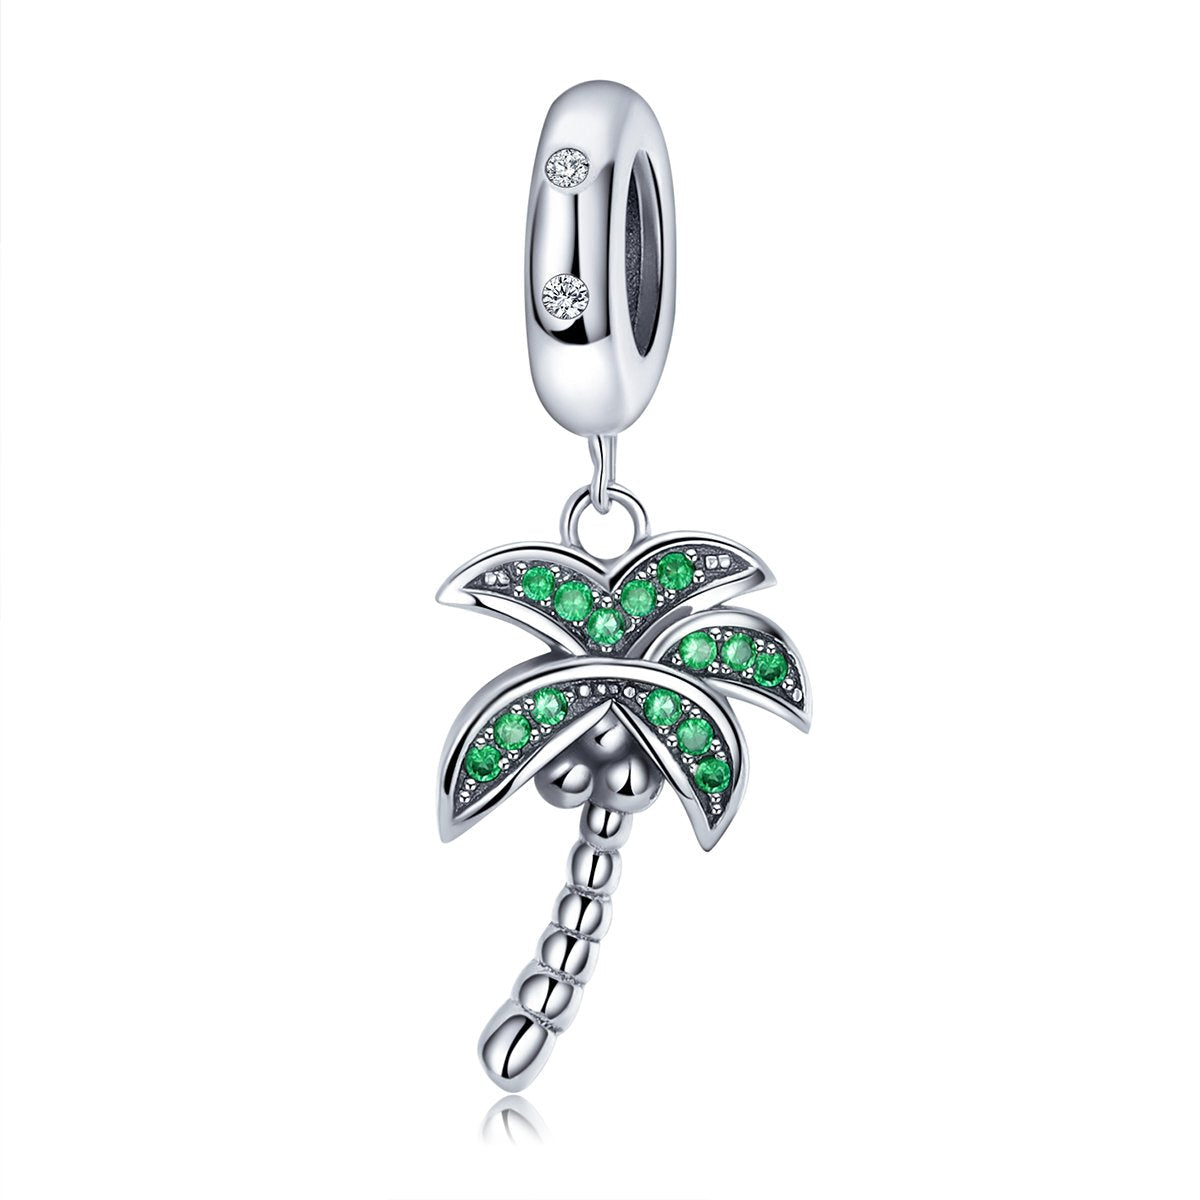 Sterling 925 silver charm the green palm tree fits Pandora charm and European charm bracelet Xaxe.com